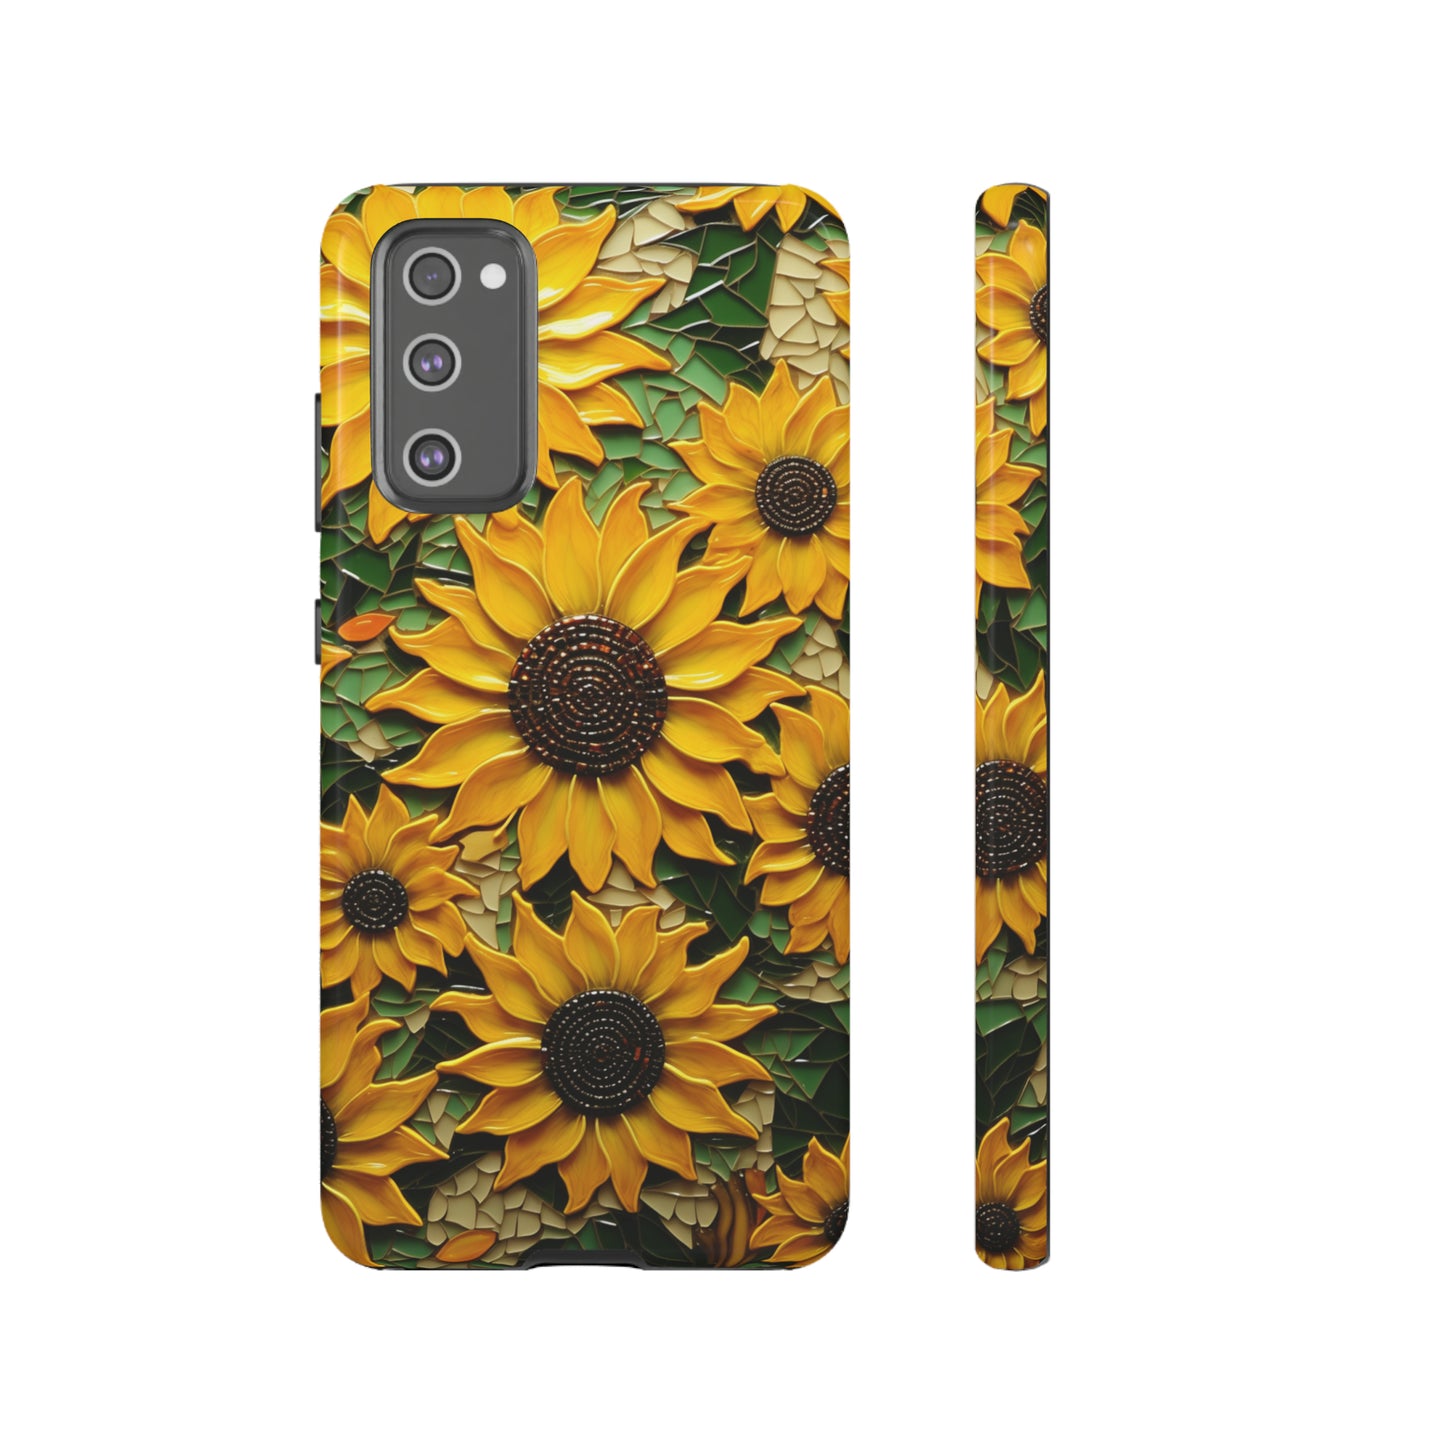 Sunflower Floral Color Explosion Mosaic Glass